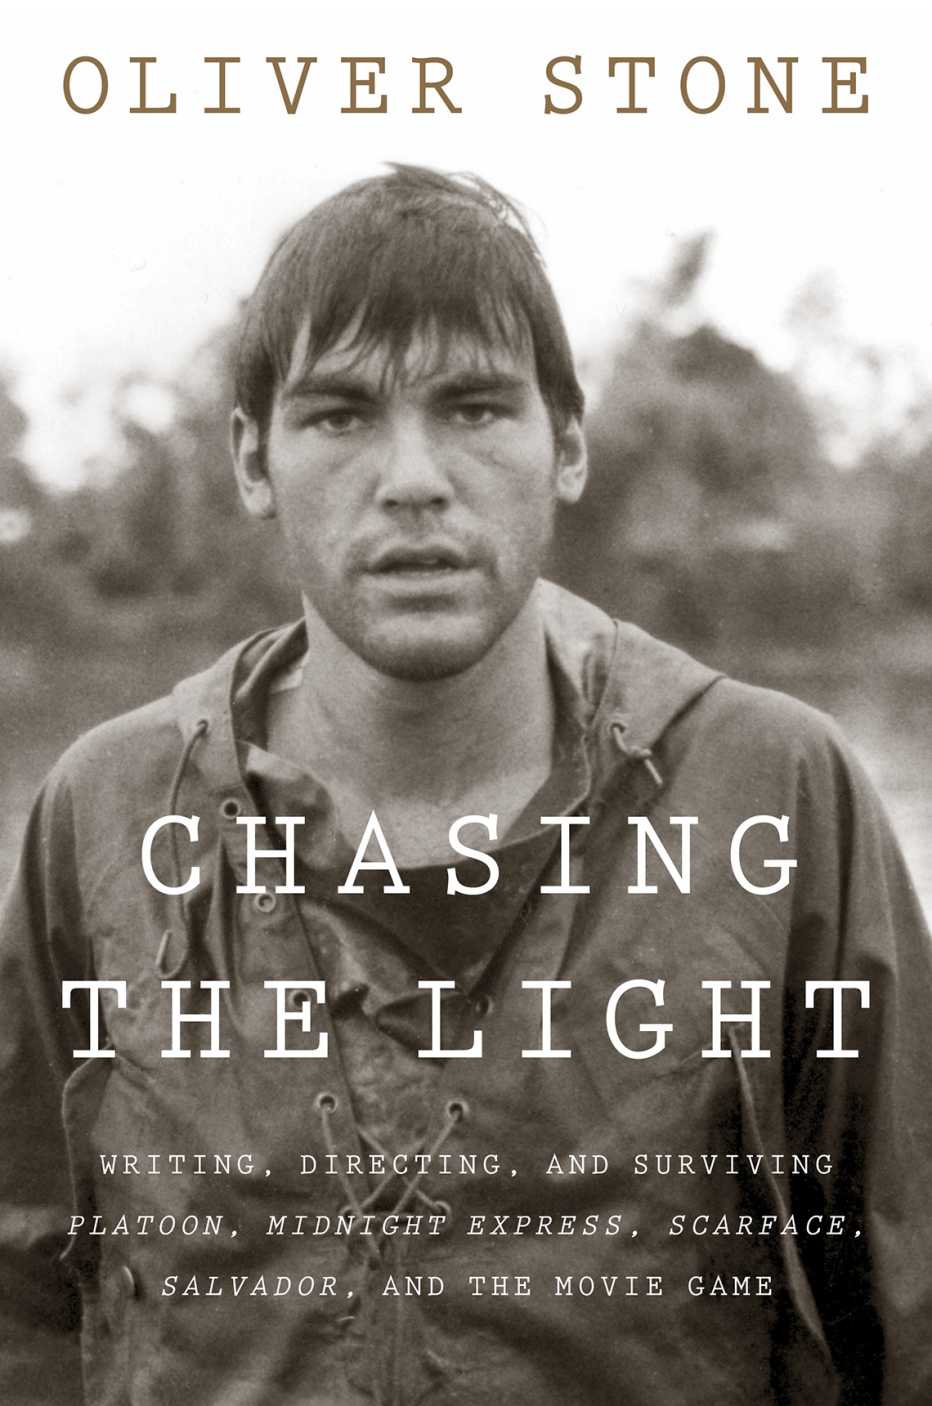 Portada de la autobiografía de Oliver Stone 'Chasing the Light'